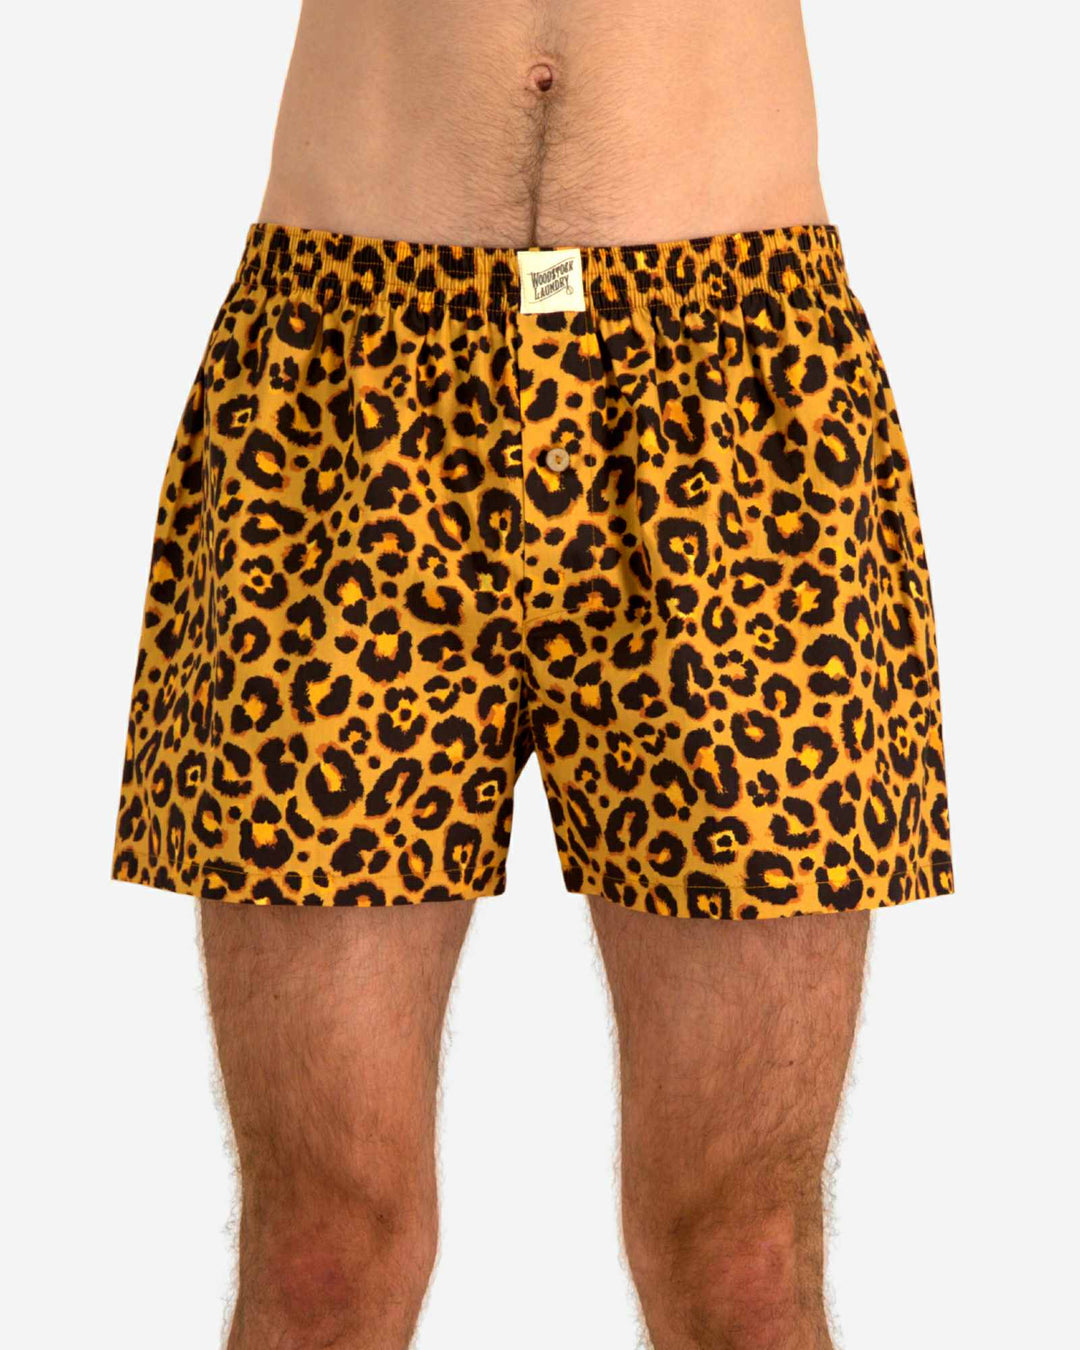 Mens boxer shorts - leopard skin